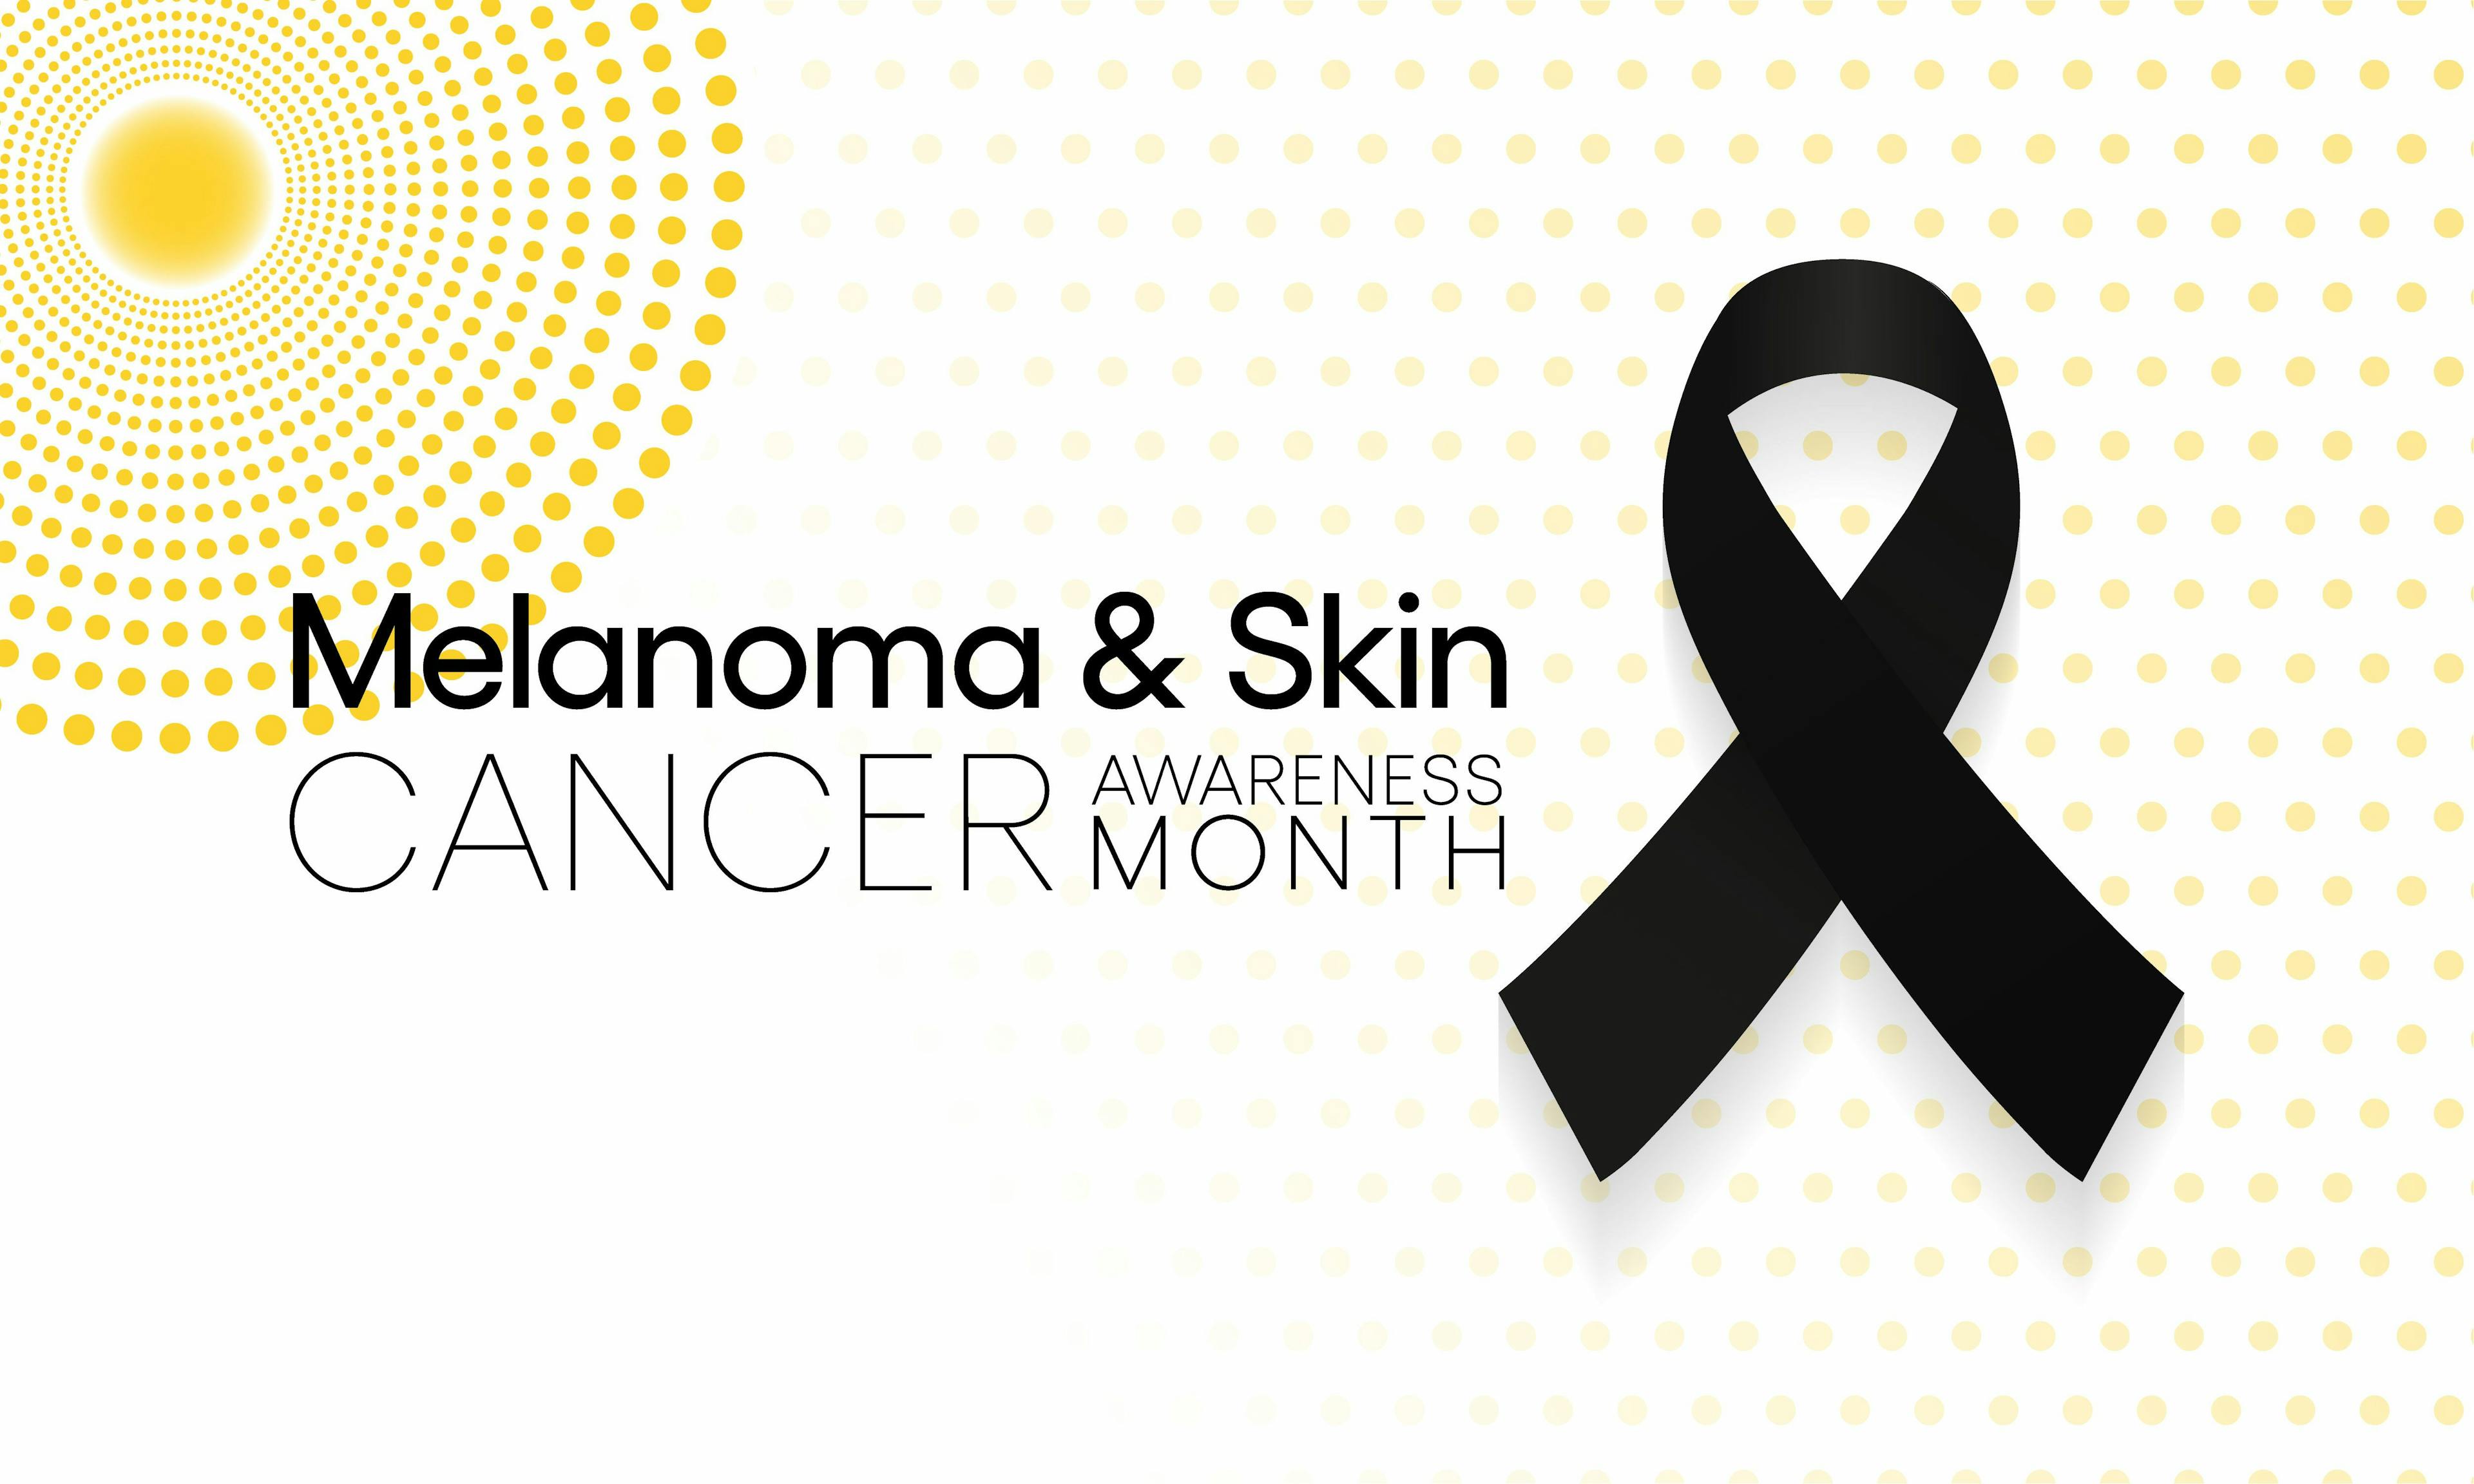 Recognizing Melanoma and Skin Cancer Awareness Month